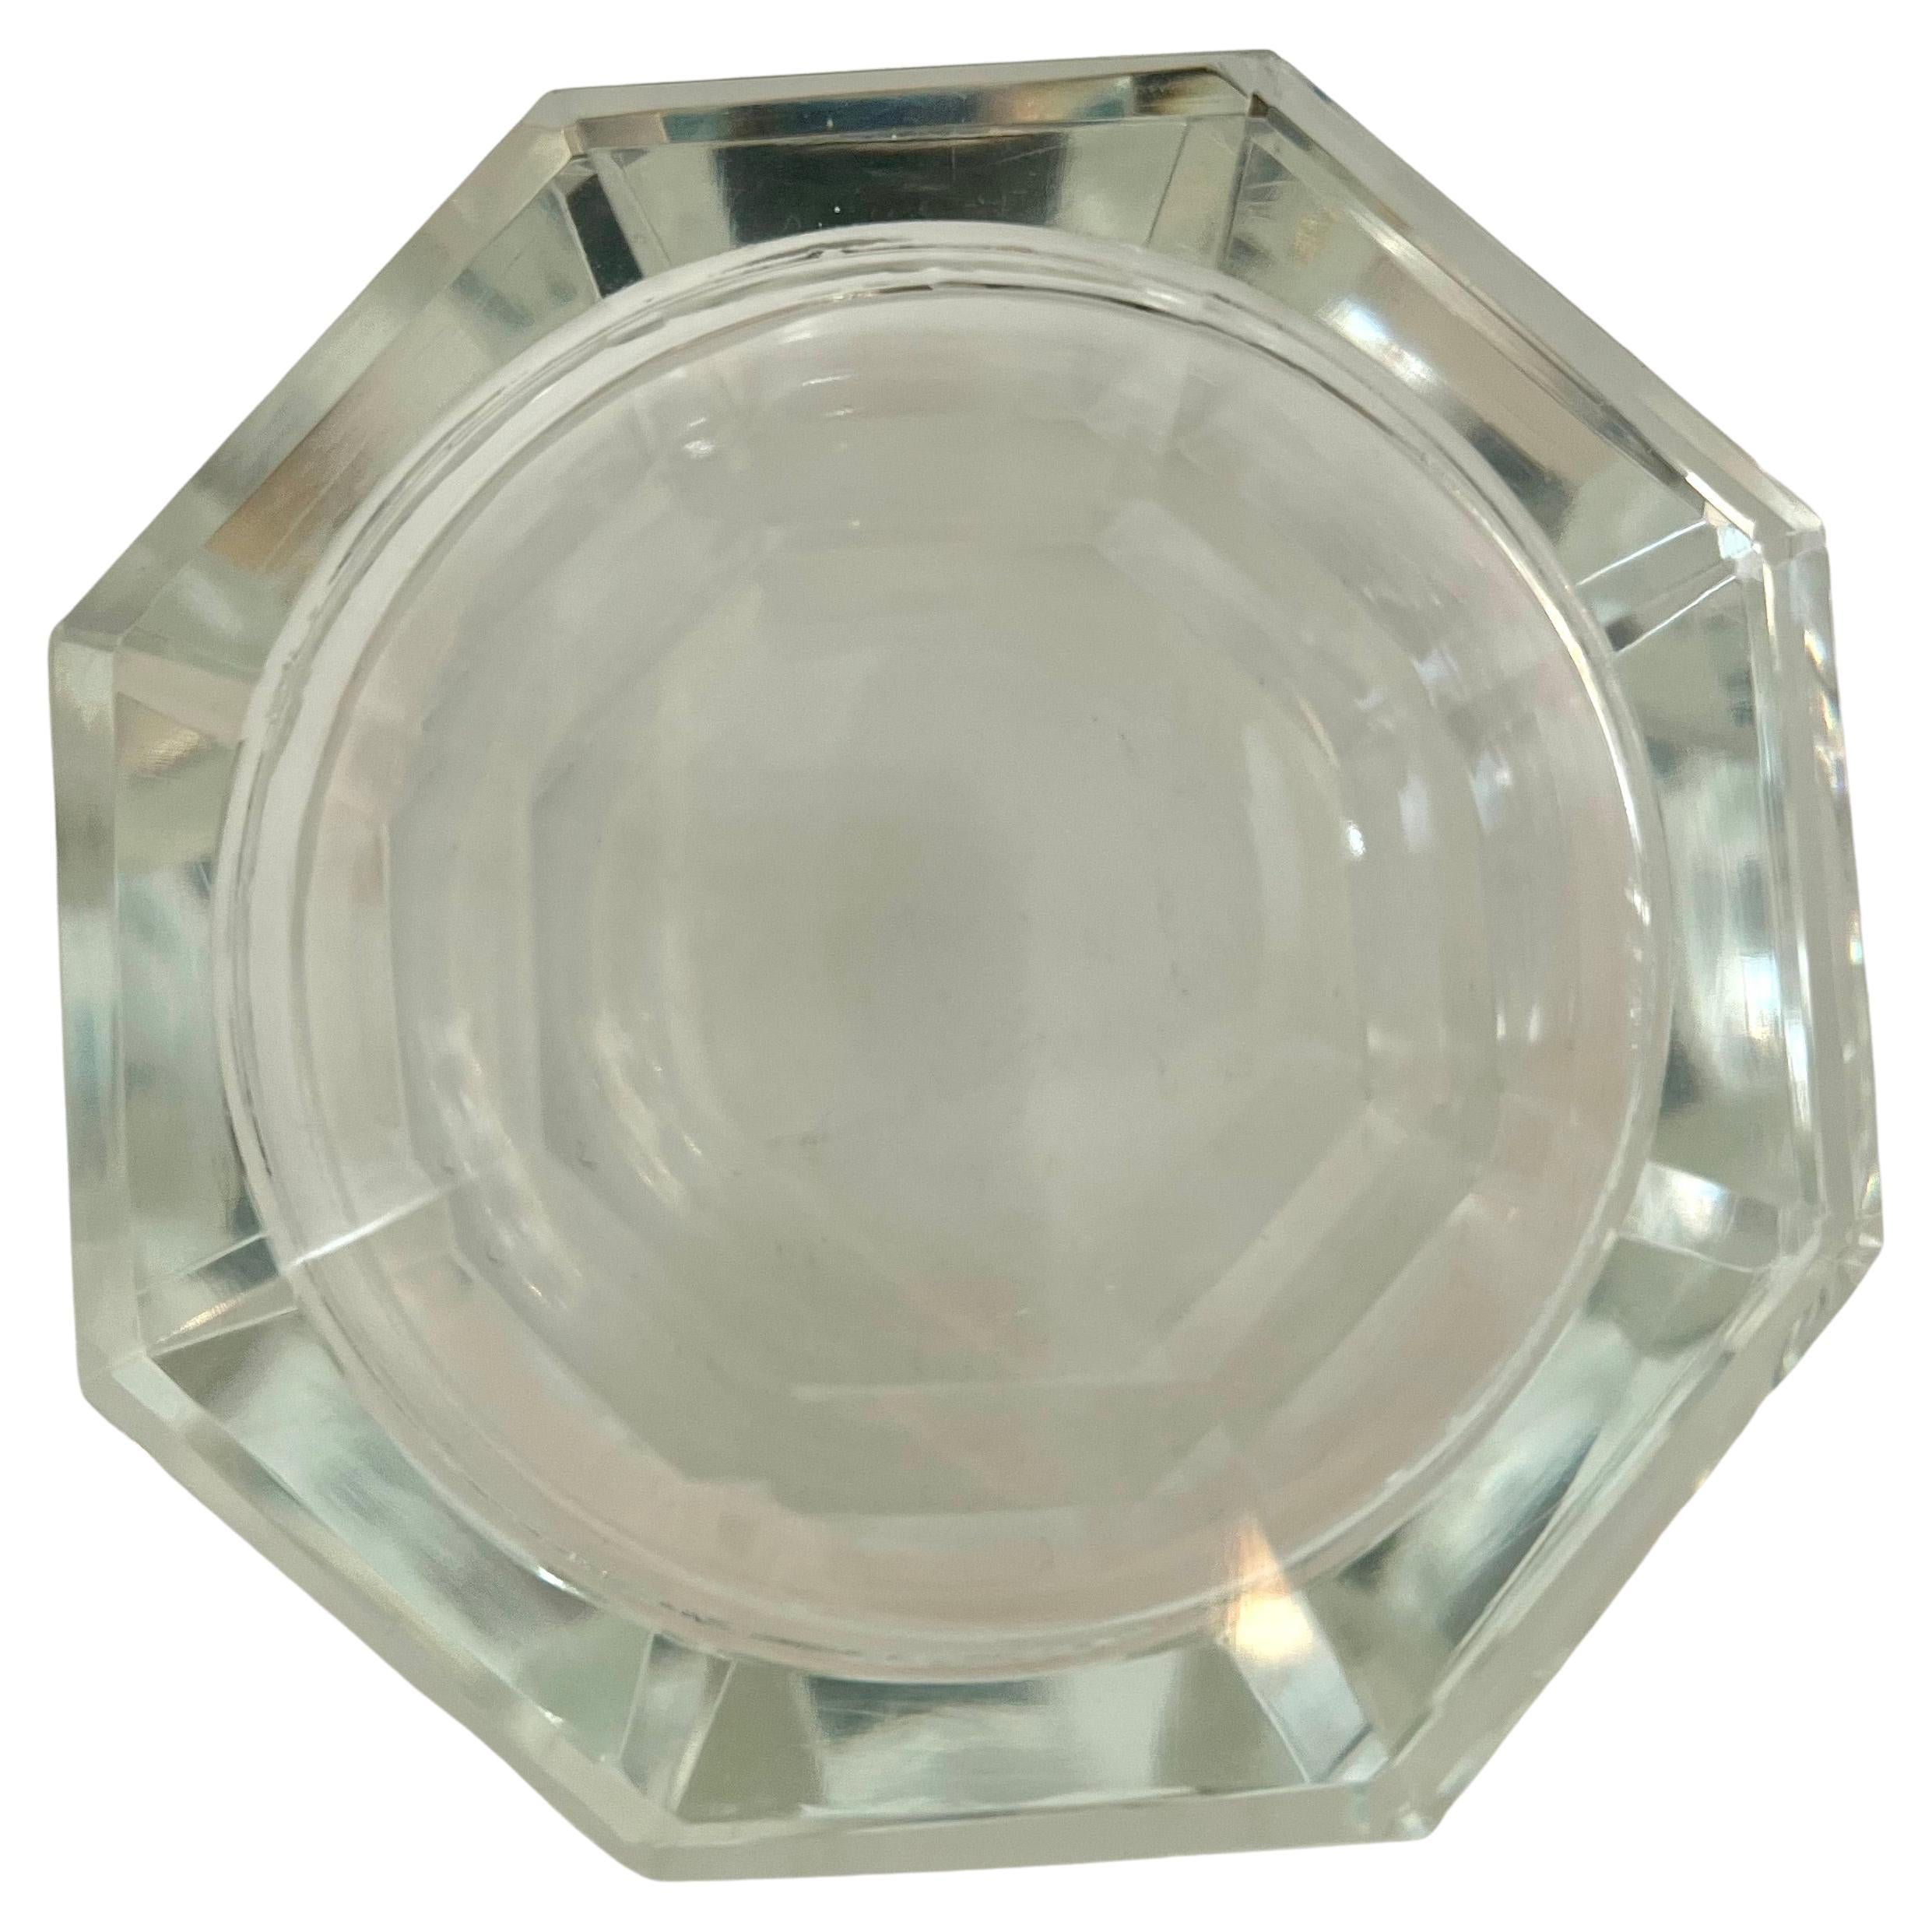 Bol octogonal en cristal avec couvercle